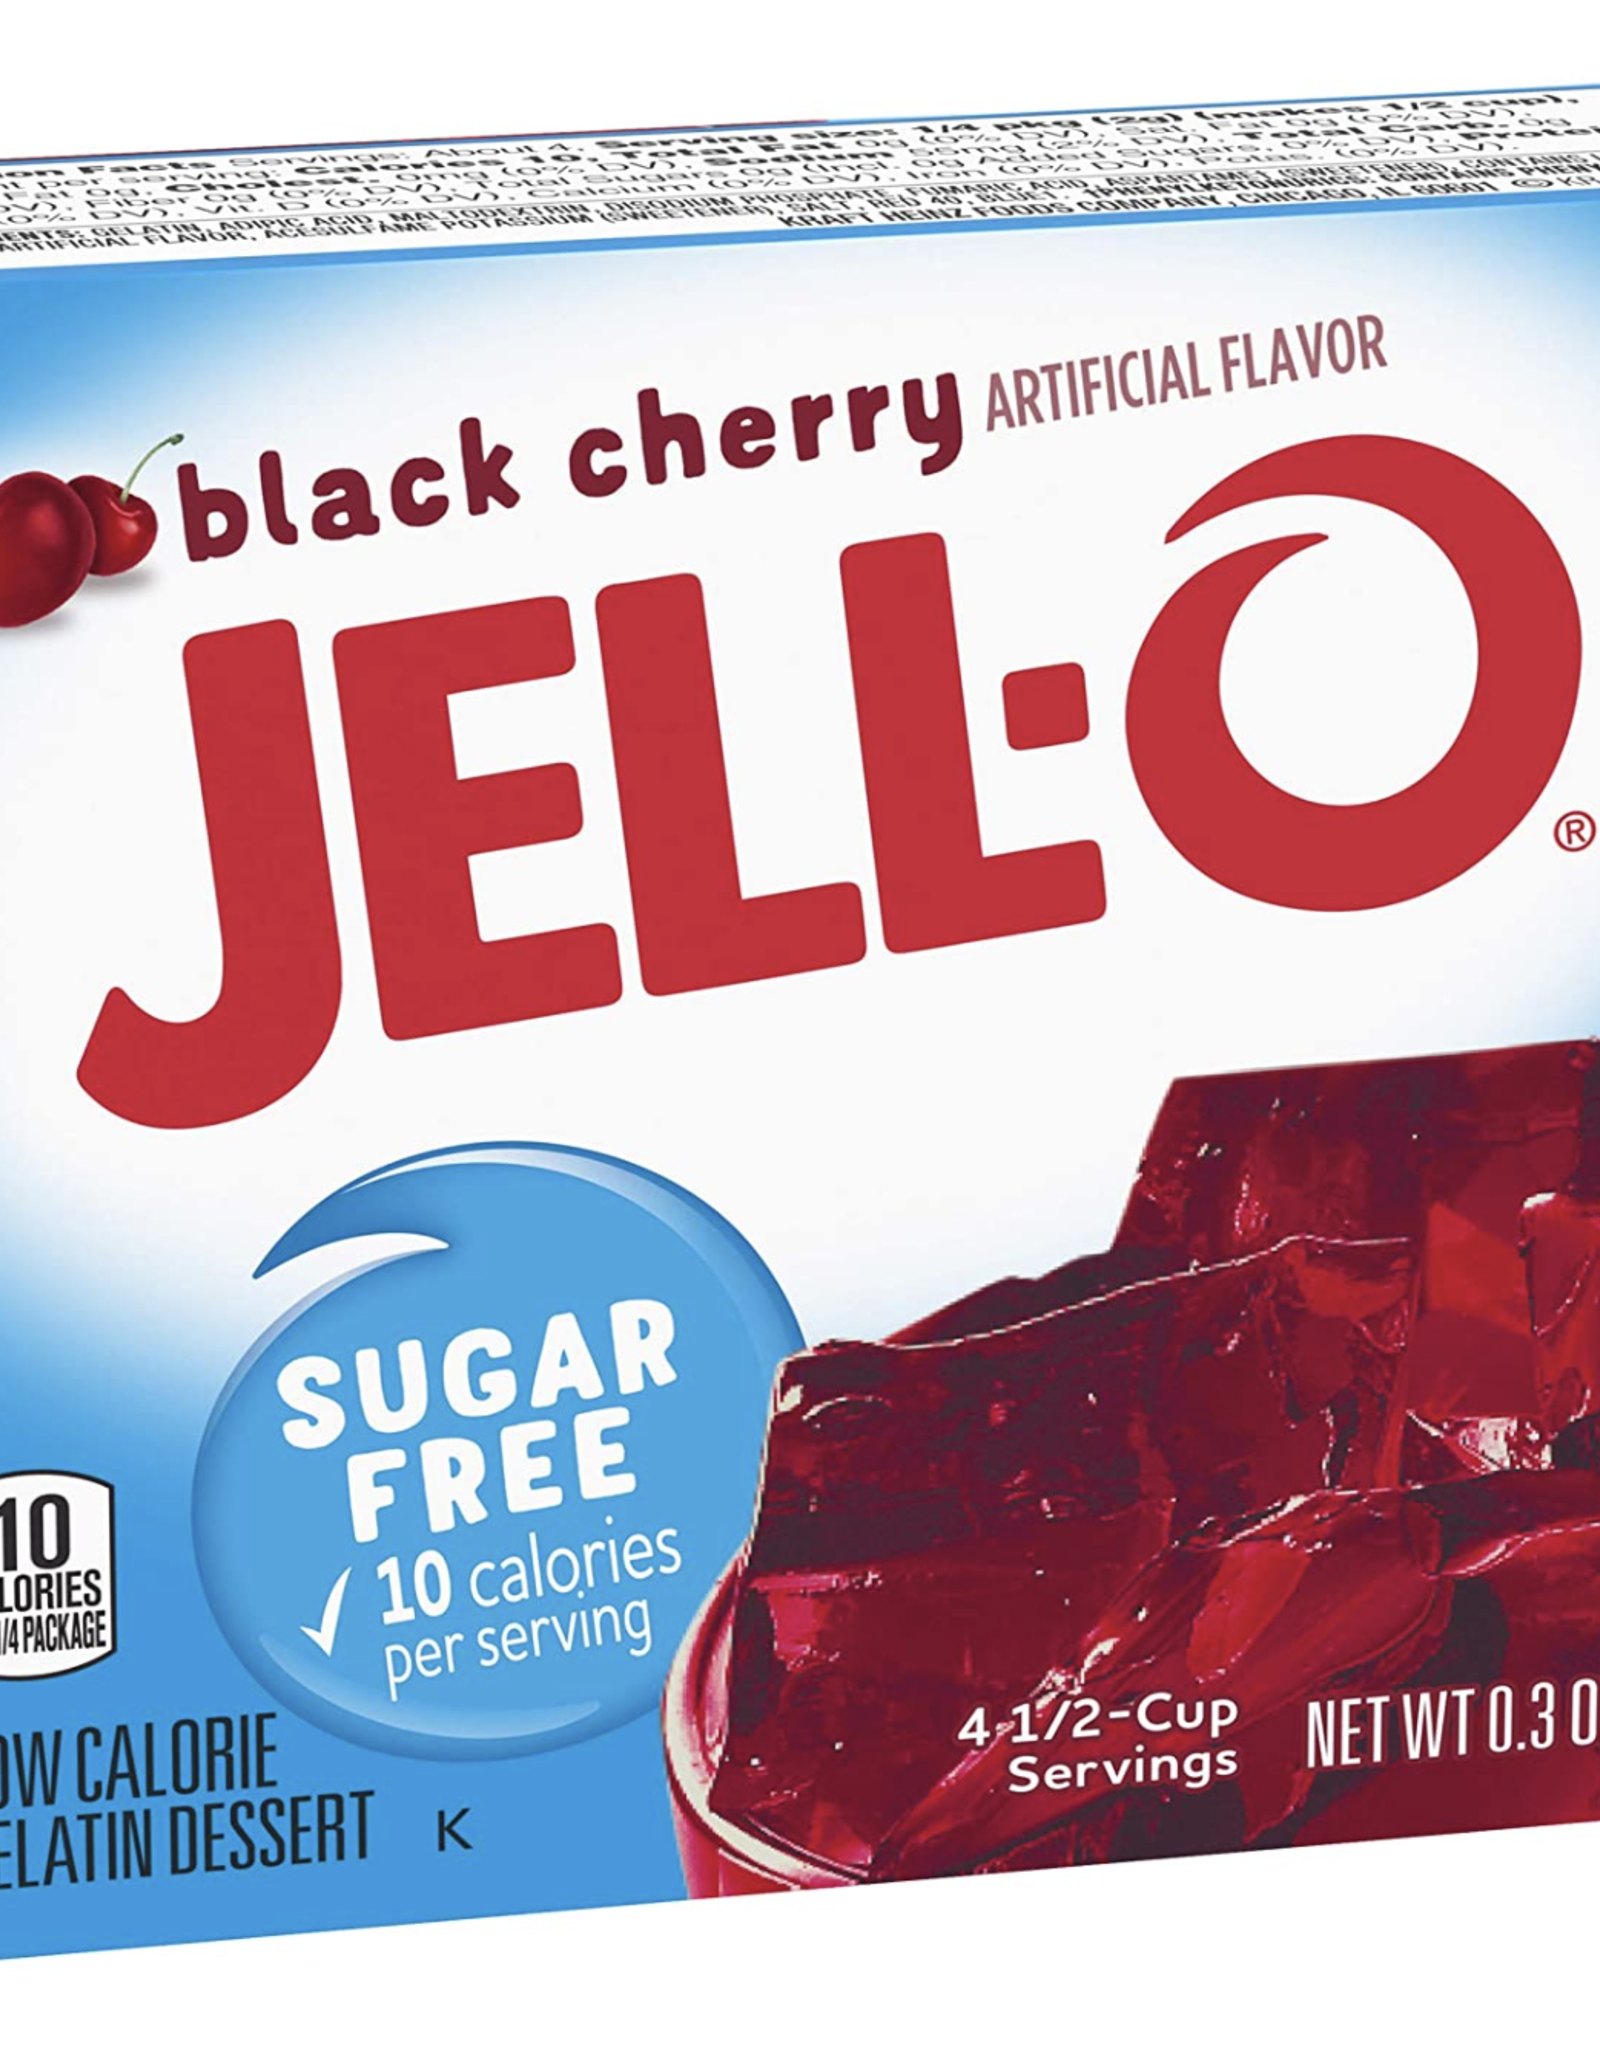 Jello Jello Gelatin Mix Black Cherry